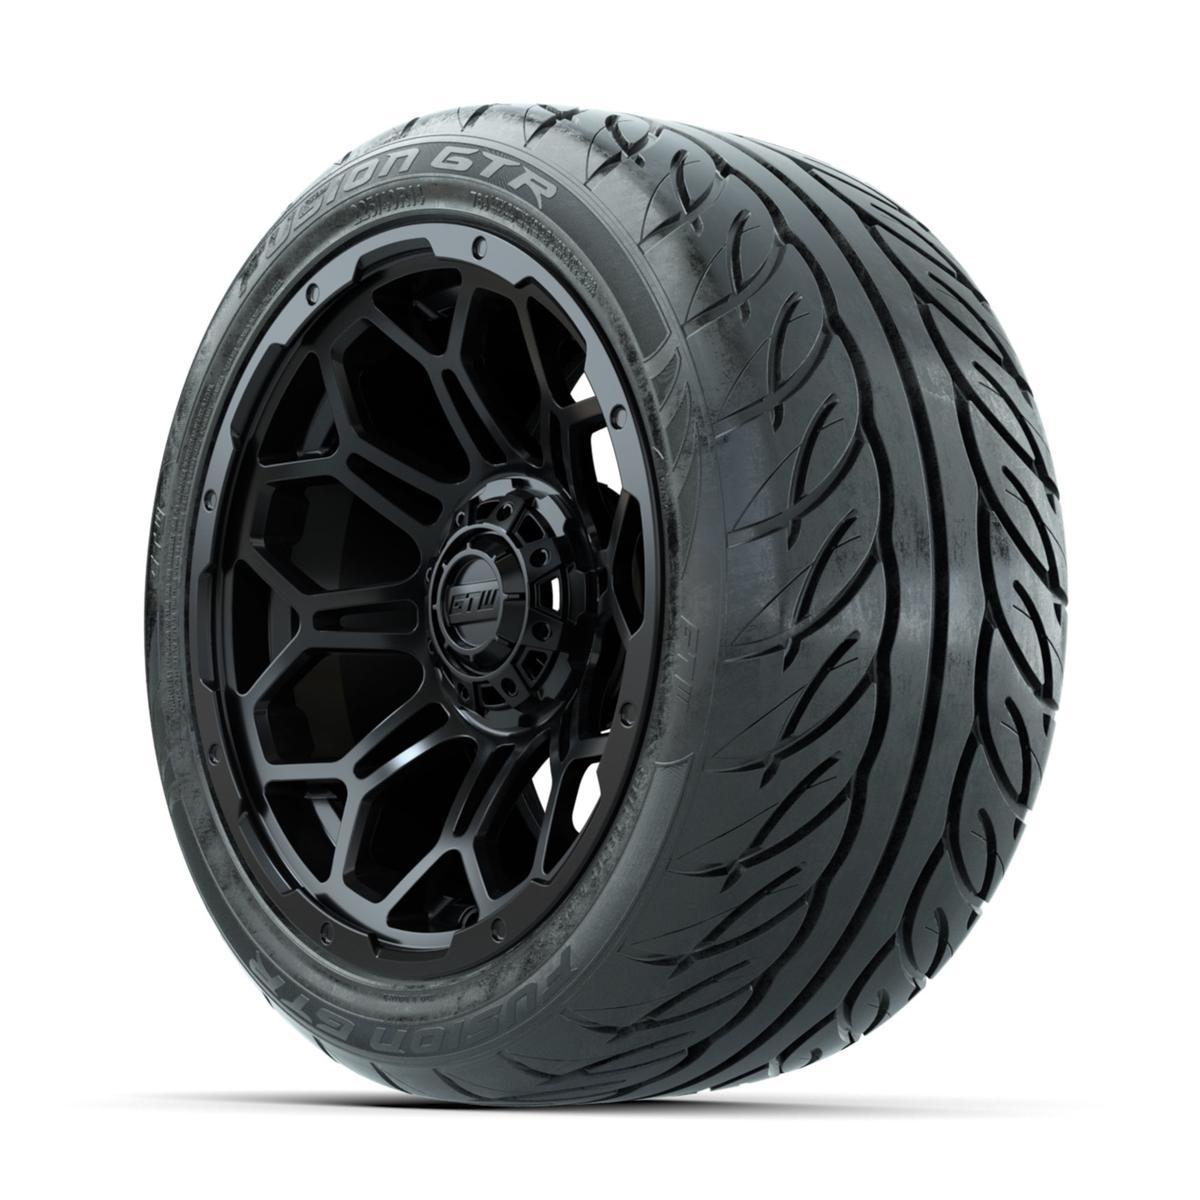 GTW Bravo Matte Black 14 in Wheels with 225/40-R14 Fusion GTR Street Tires – Full Set